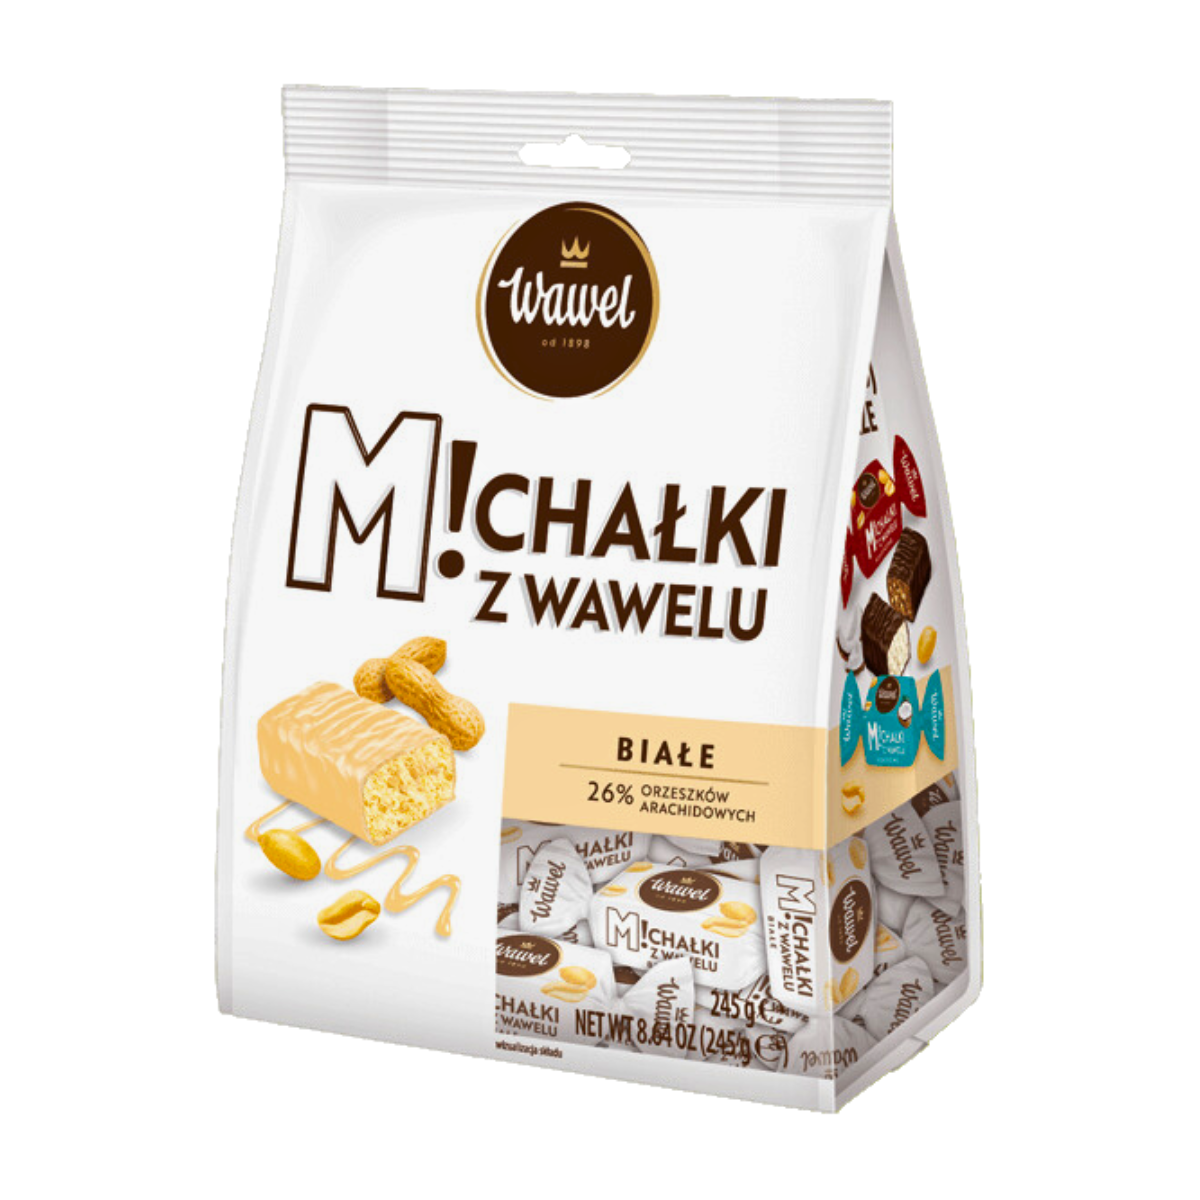 Wawel Michalki Milk & Peanut Candy 245g